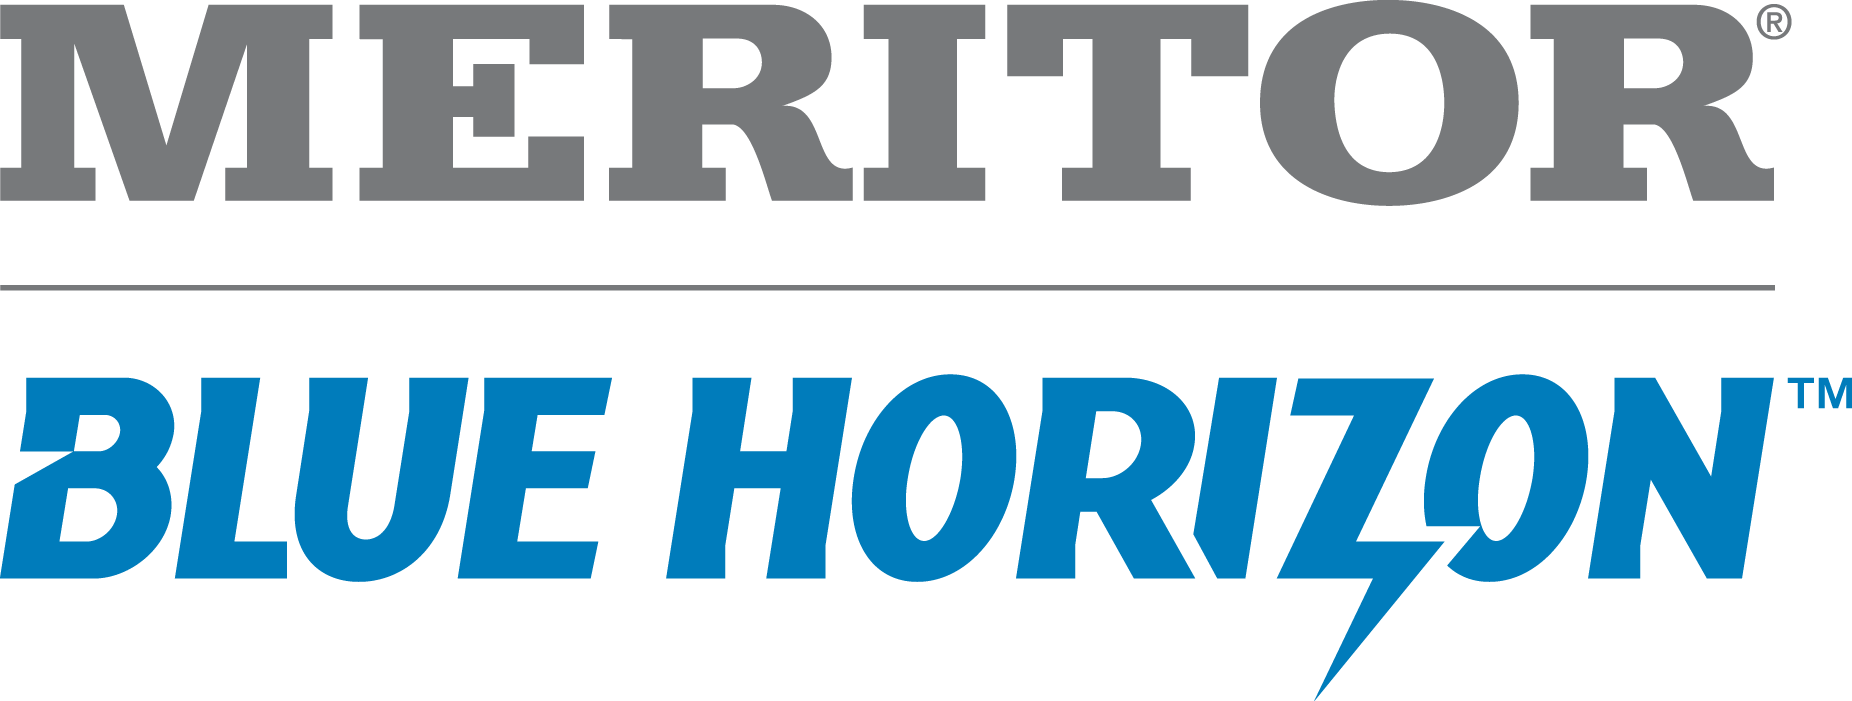 Meritor, Inc. logo